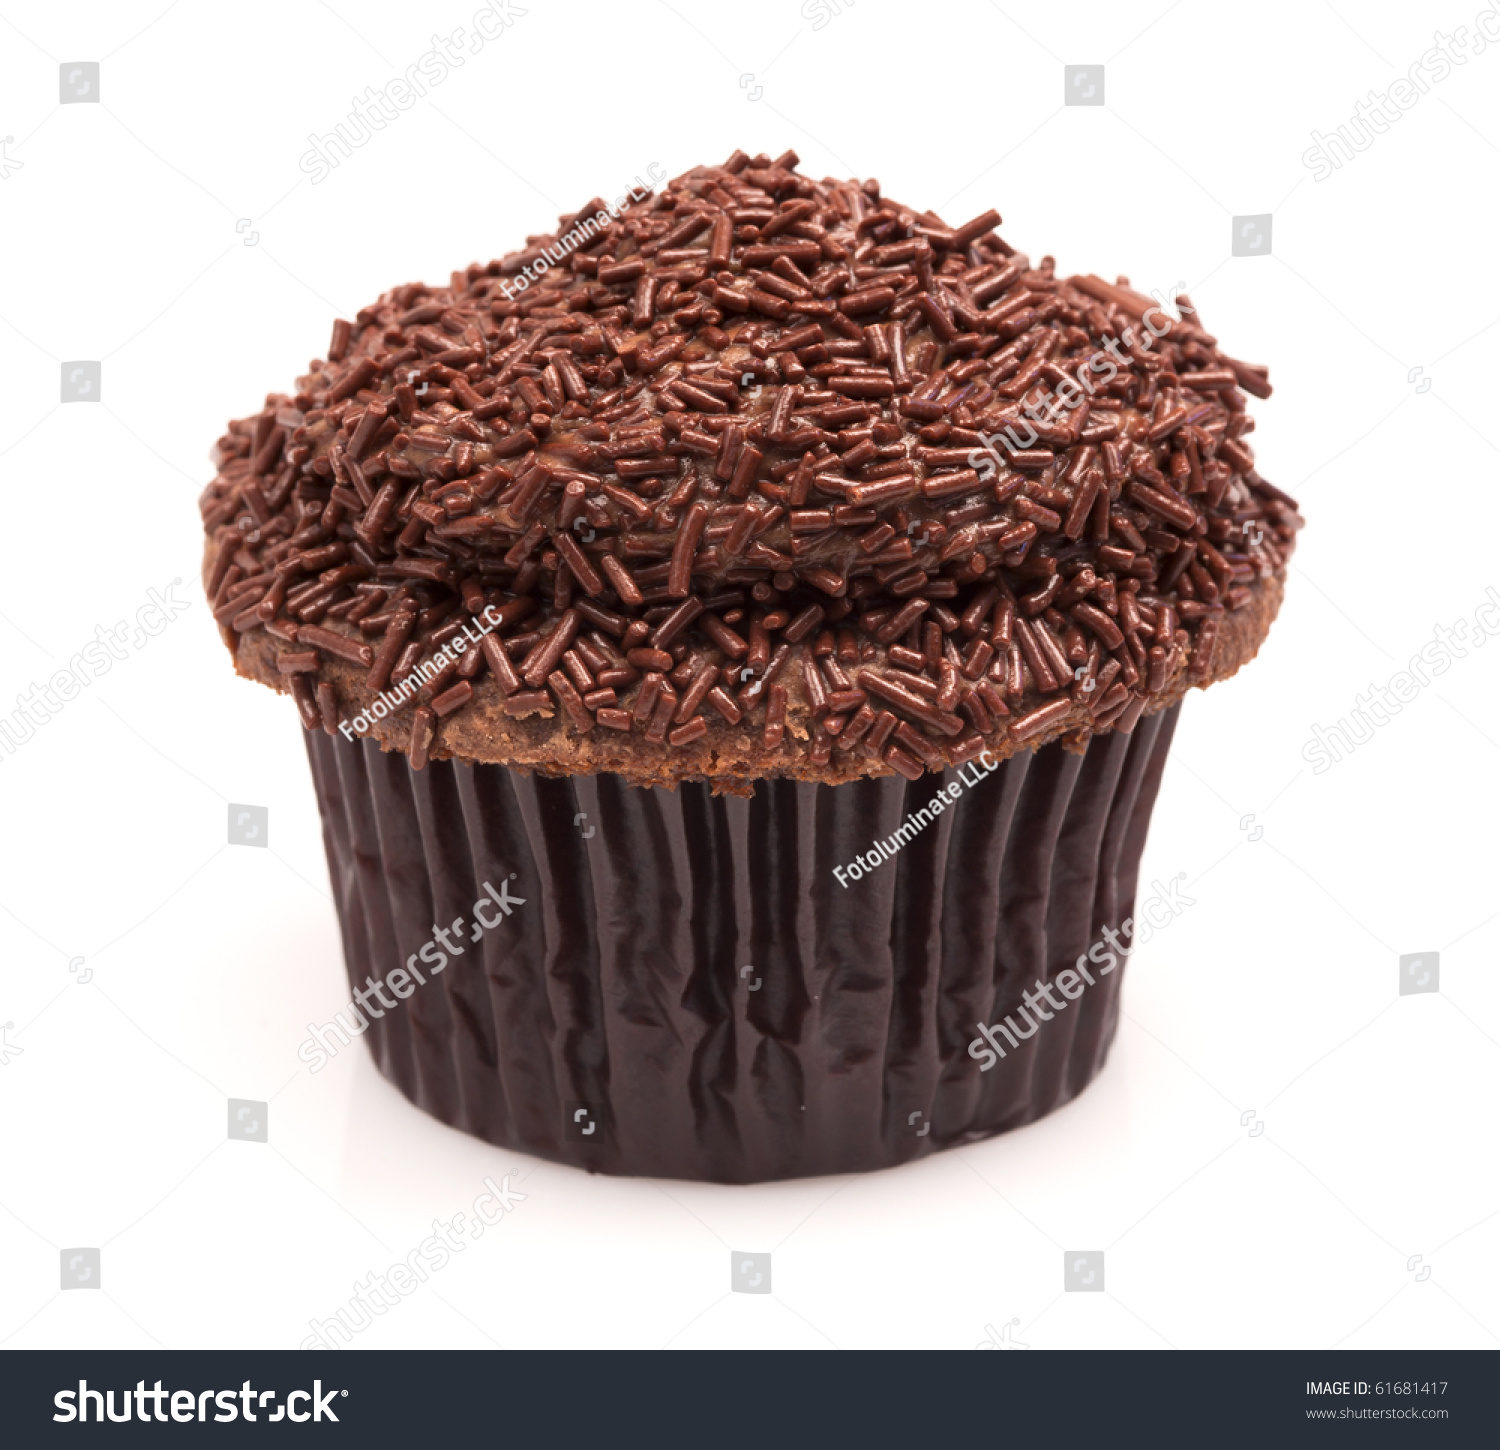 Chocolate Cupcake with Cream